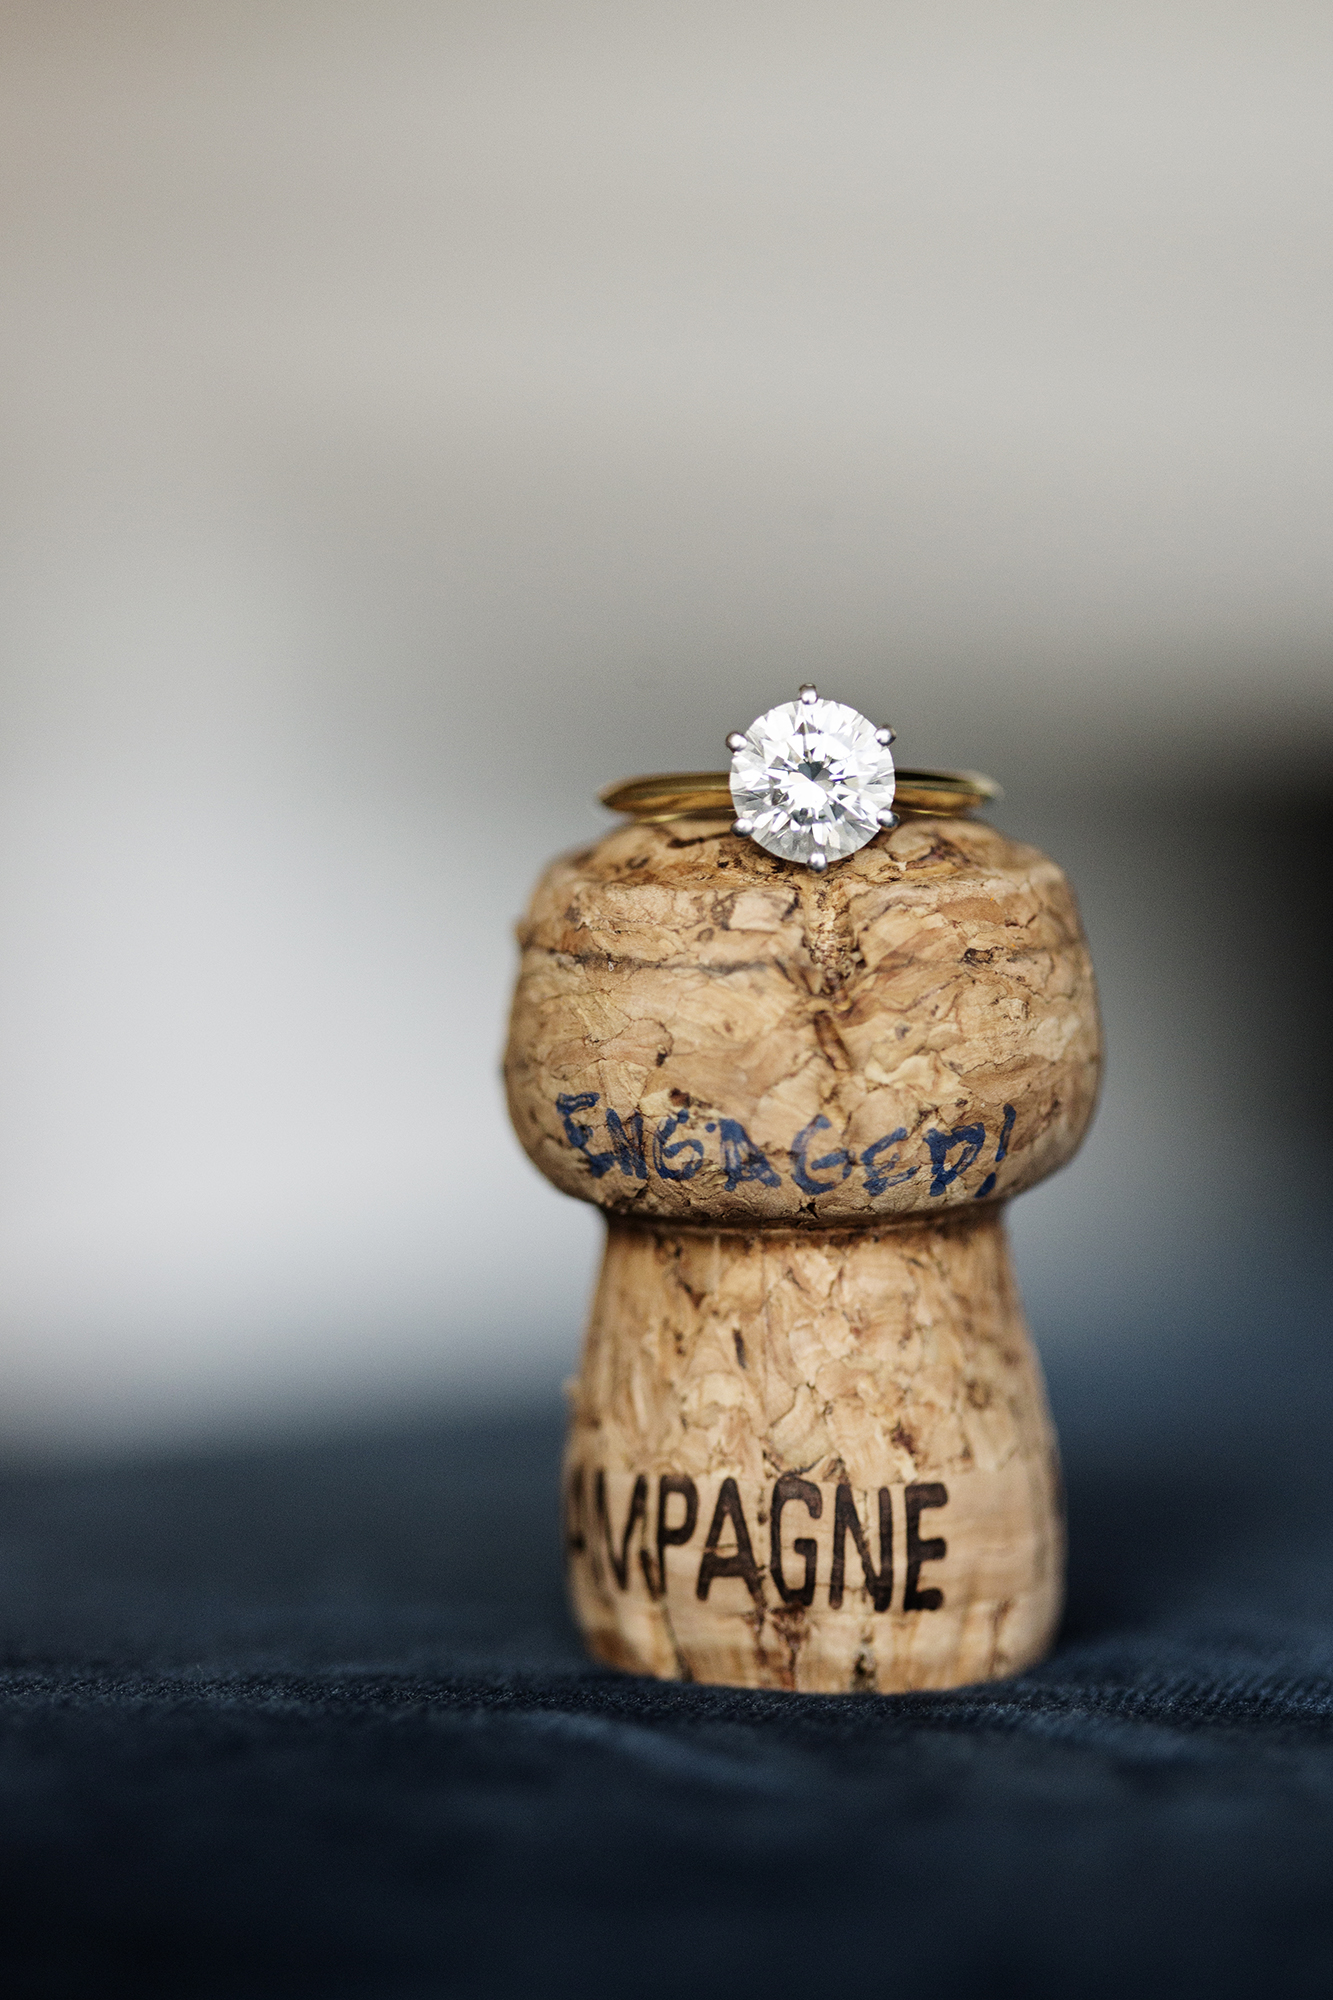 Engagement Photos | Photography by Photogen Inc. | Eliesa Johnson | Based in Minneapolis, Minnesota